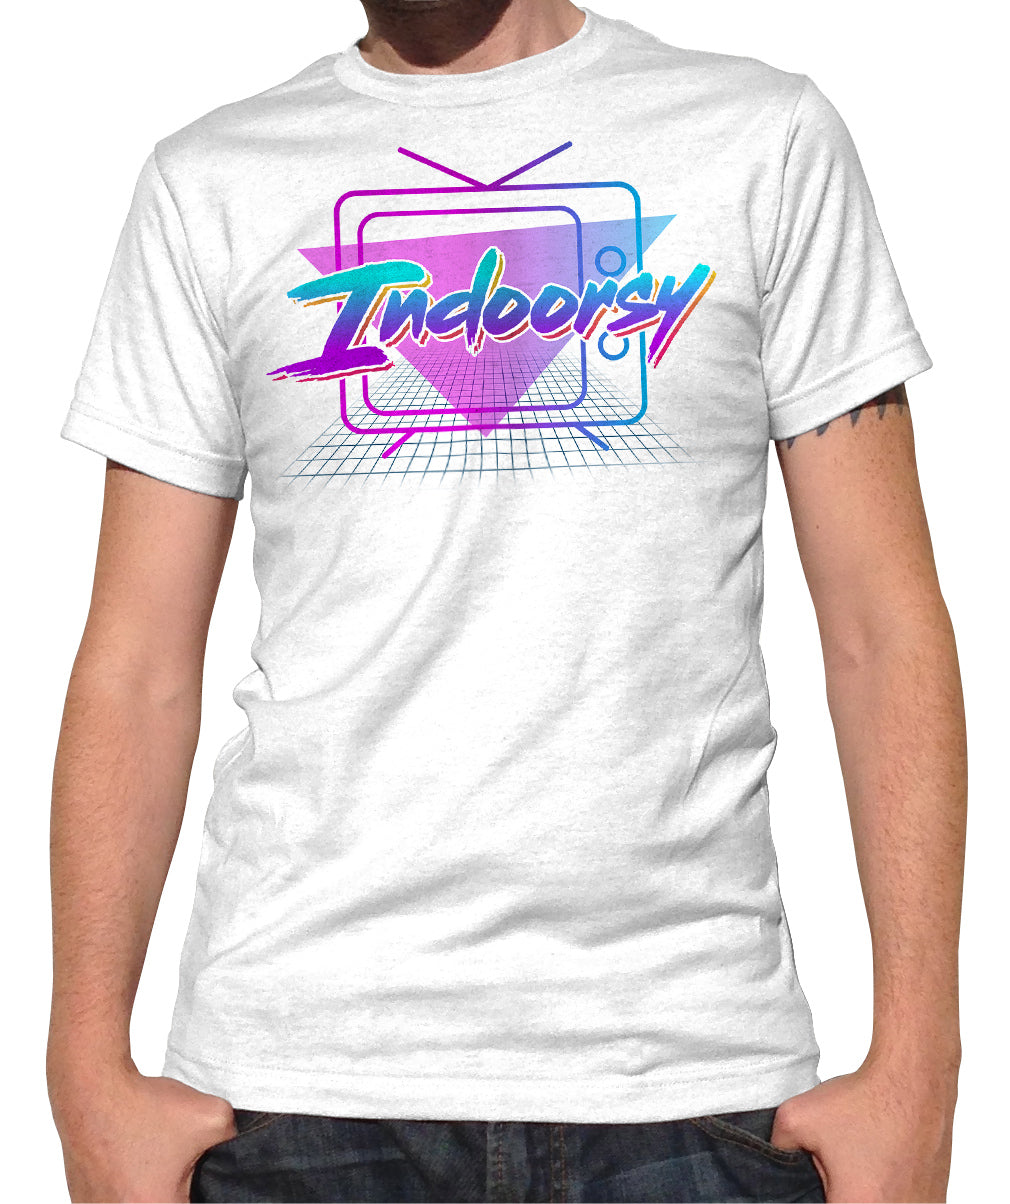 Men's Indoorsy T-Shirt